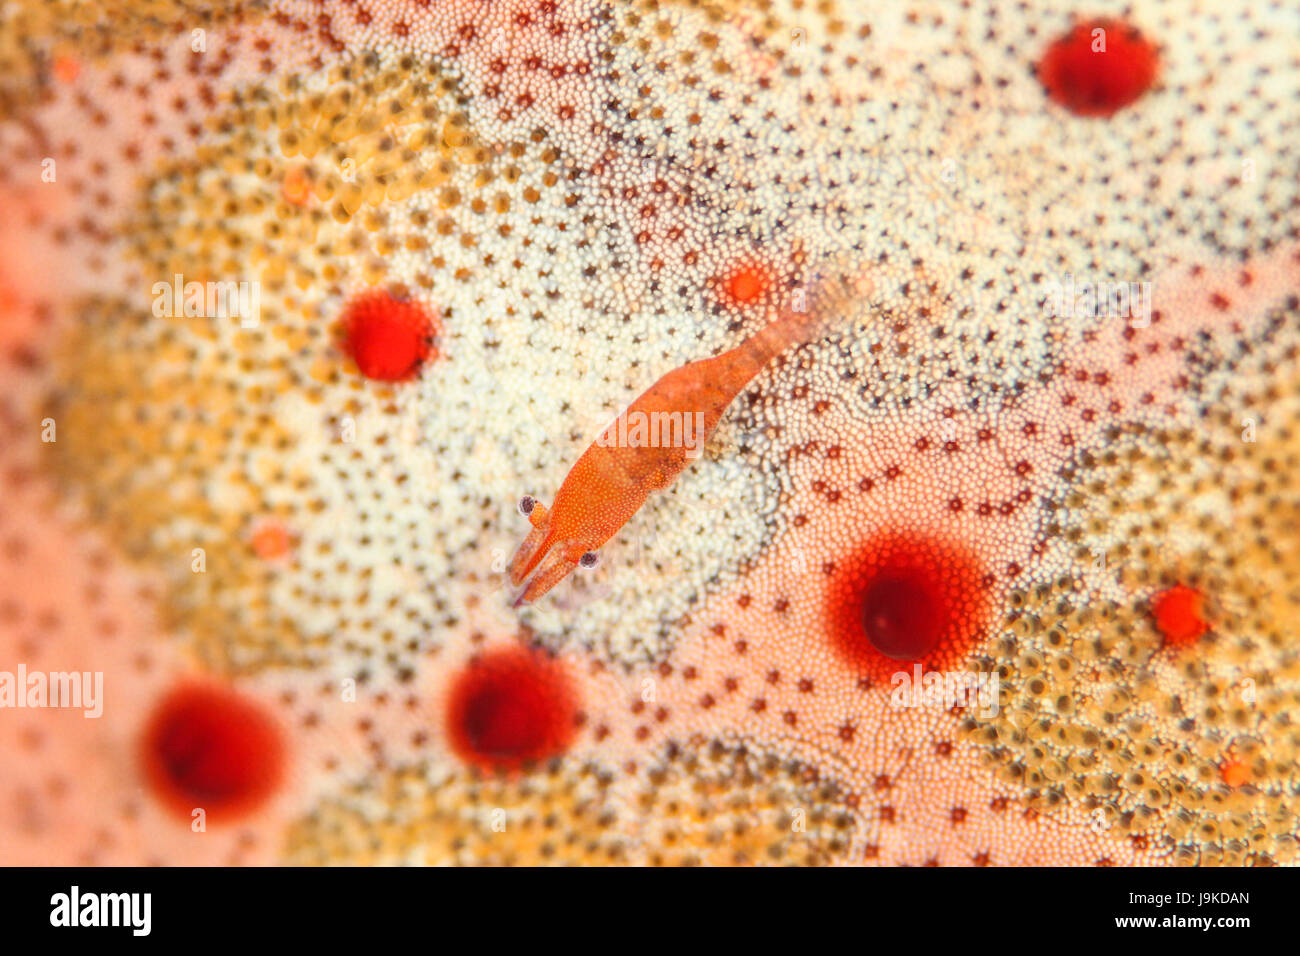 A closeup of a commensal shrimp on orange sea cucumber Stock Photo